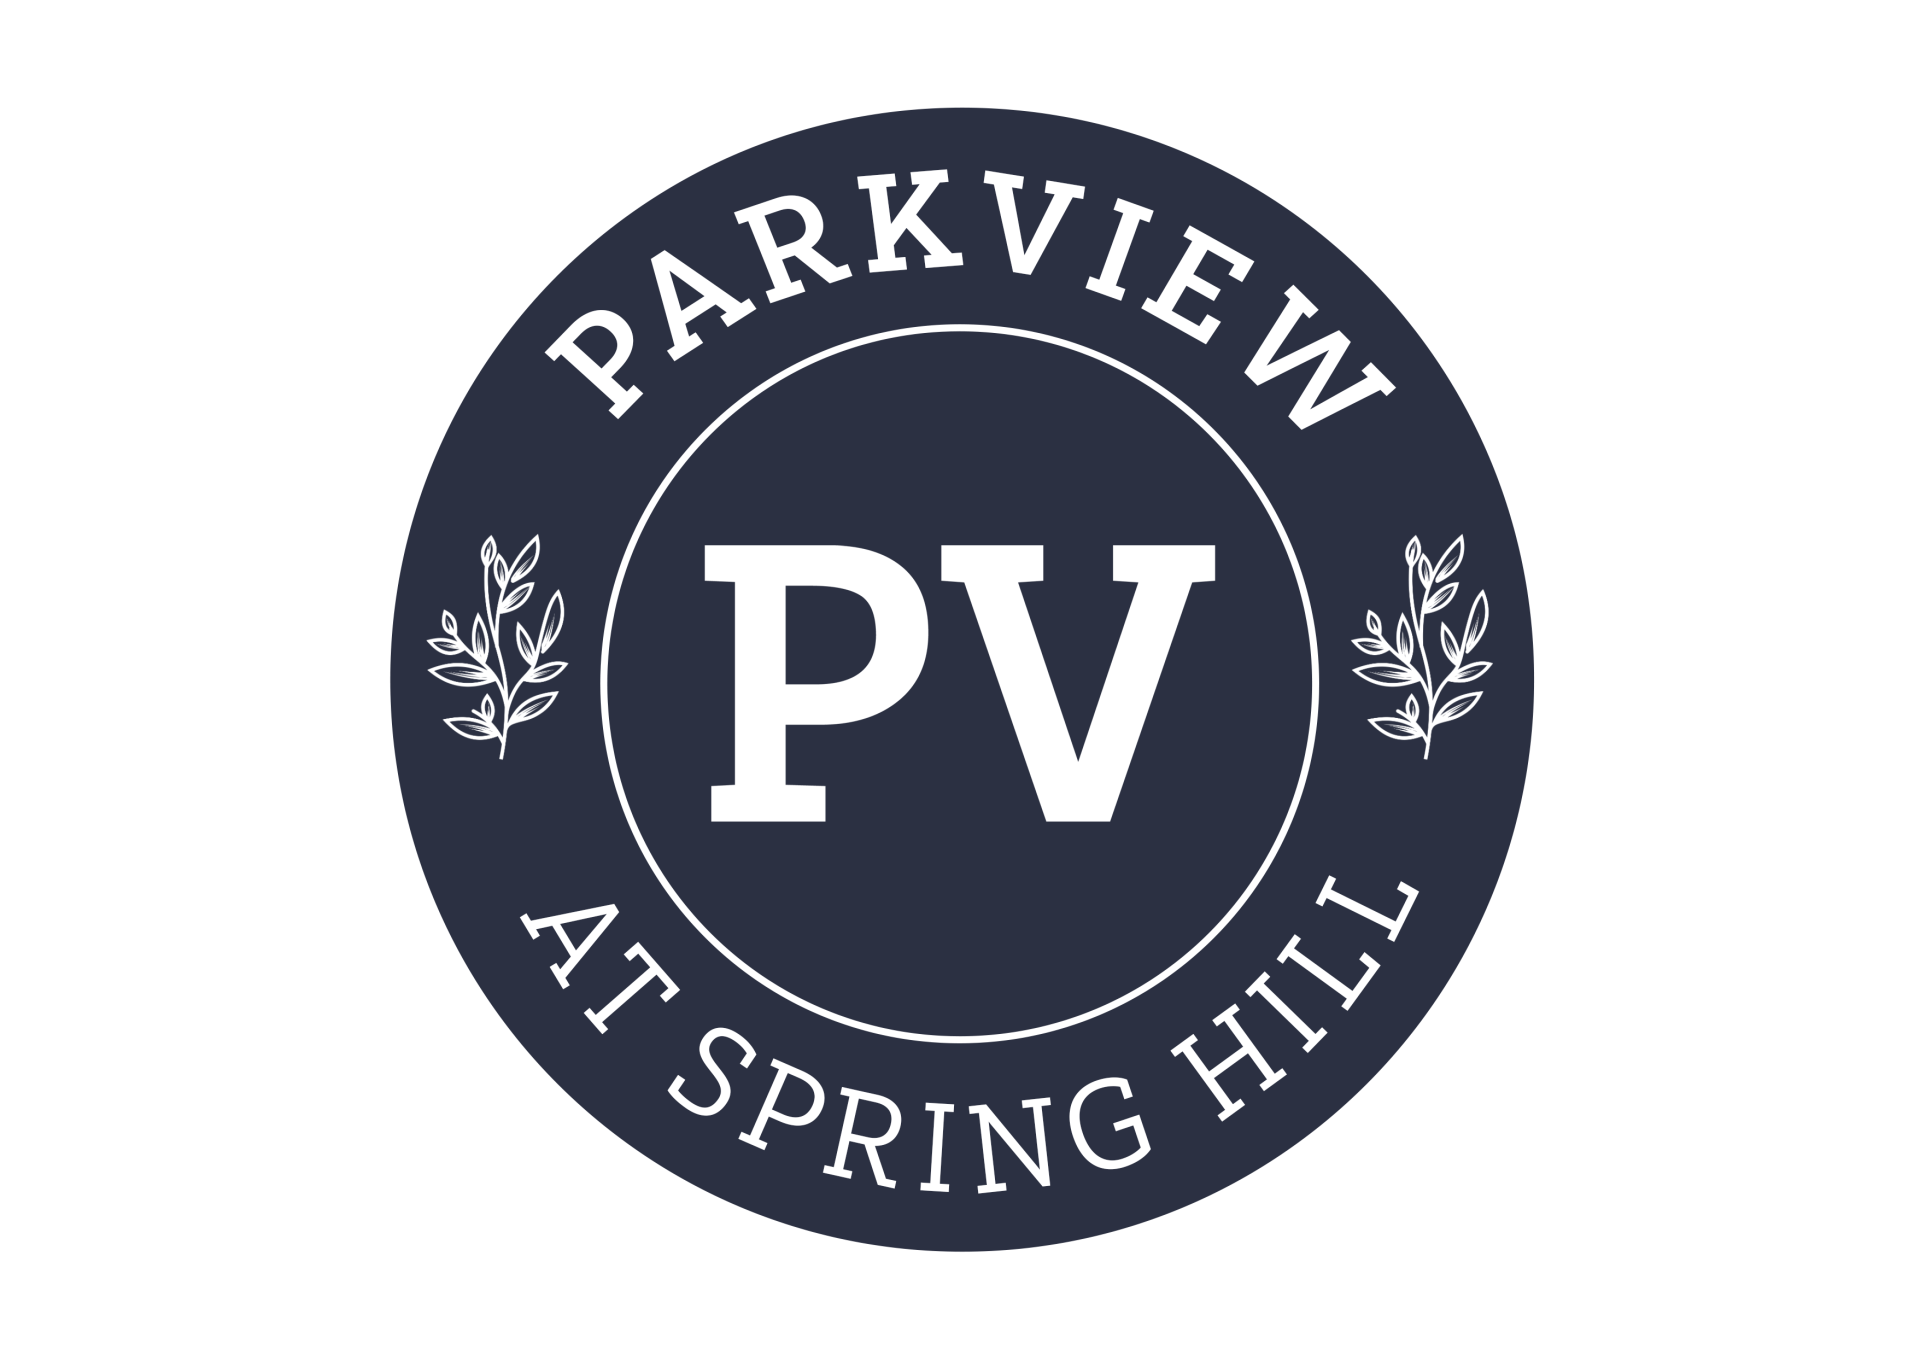 Parkview at Springhill logo